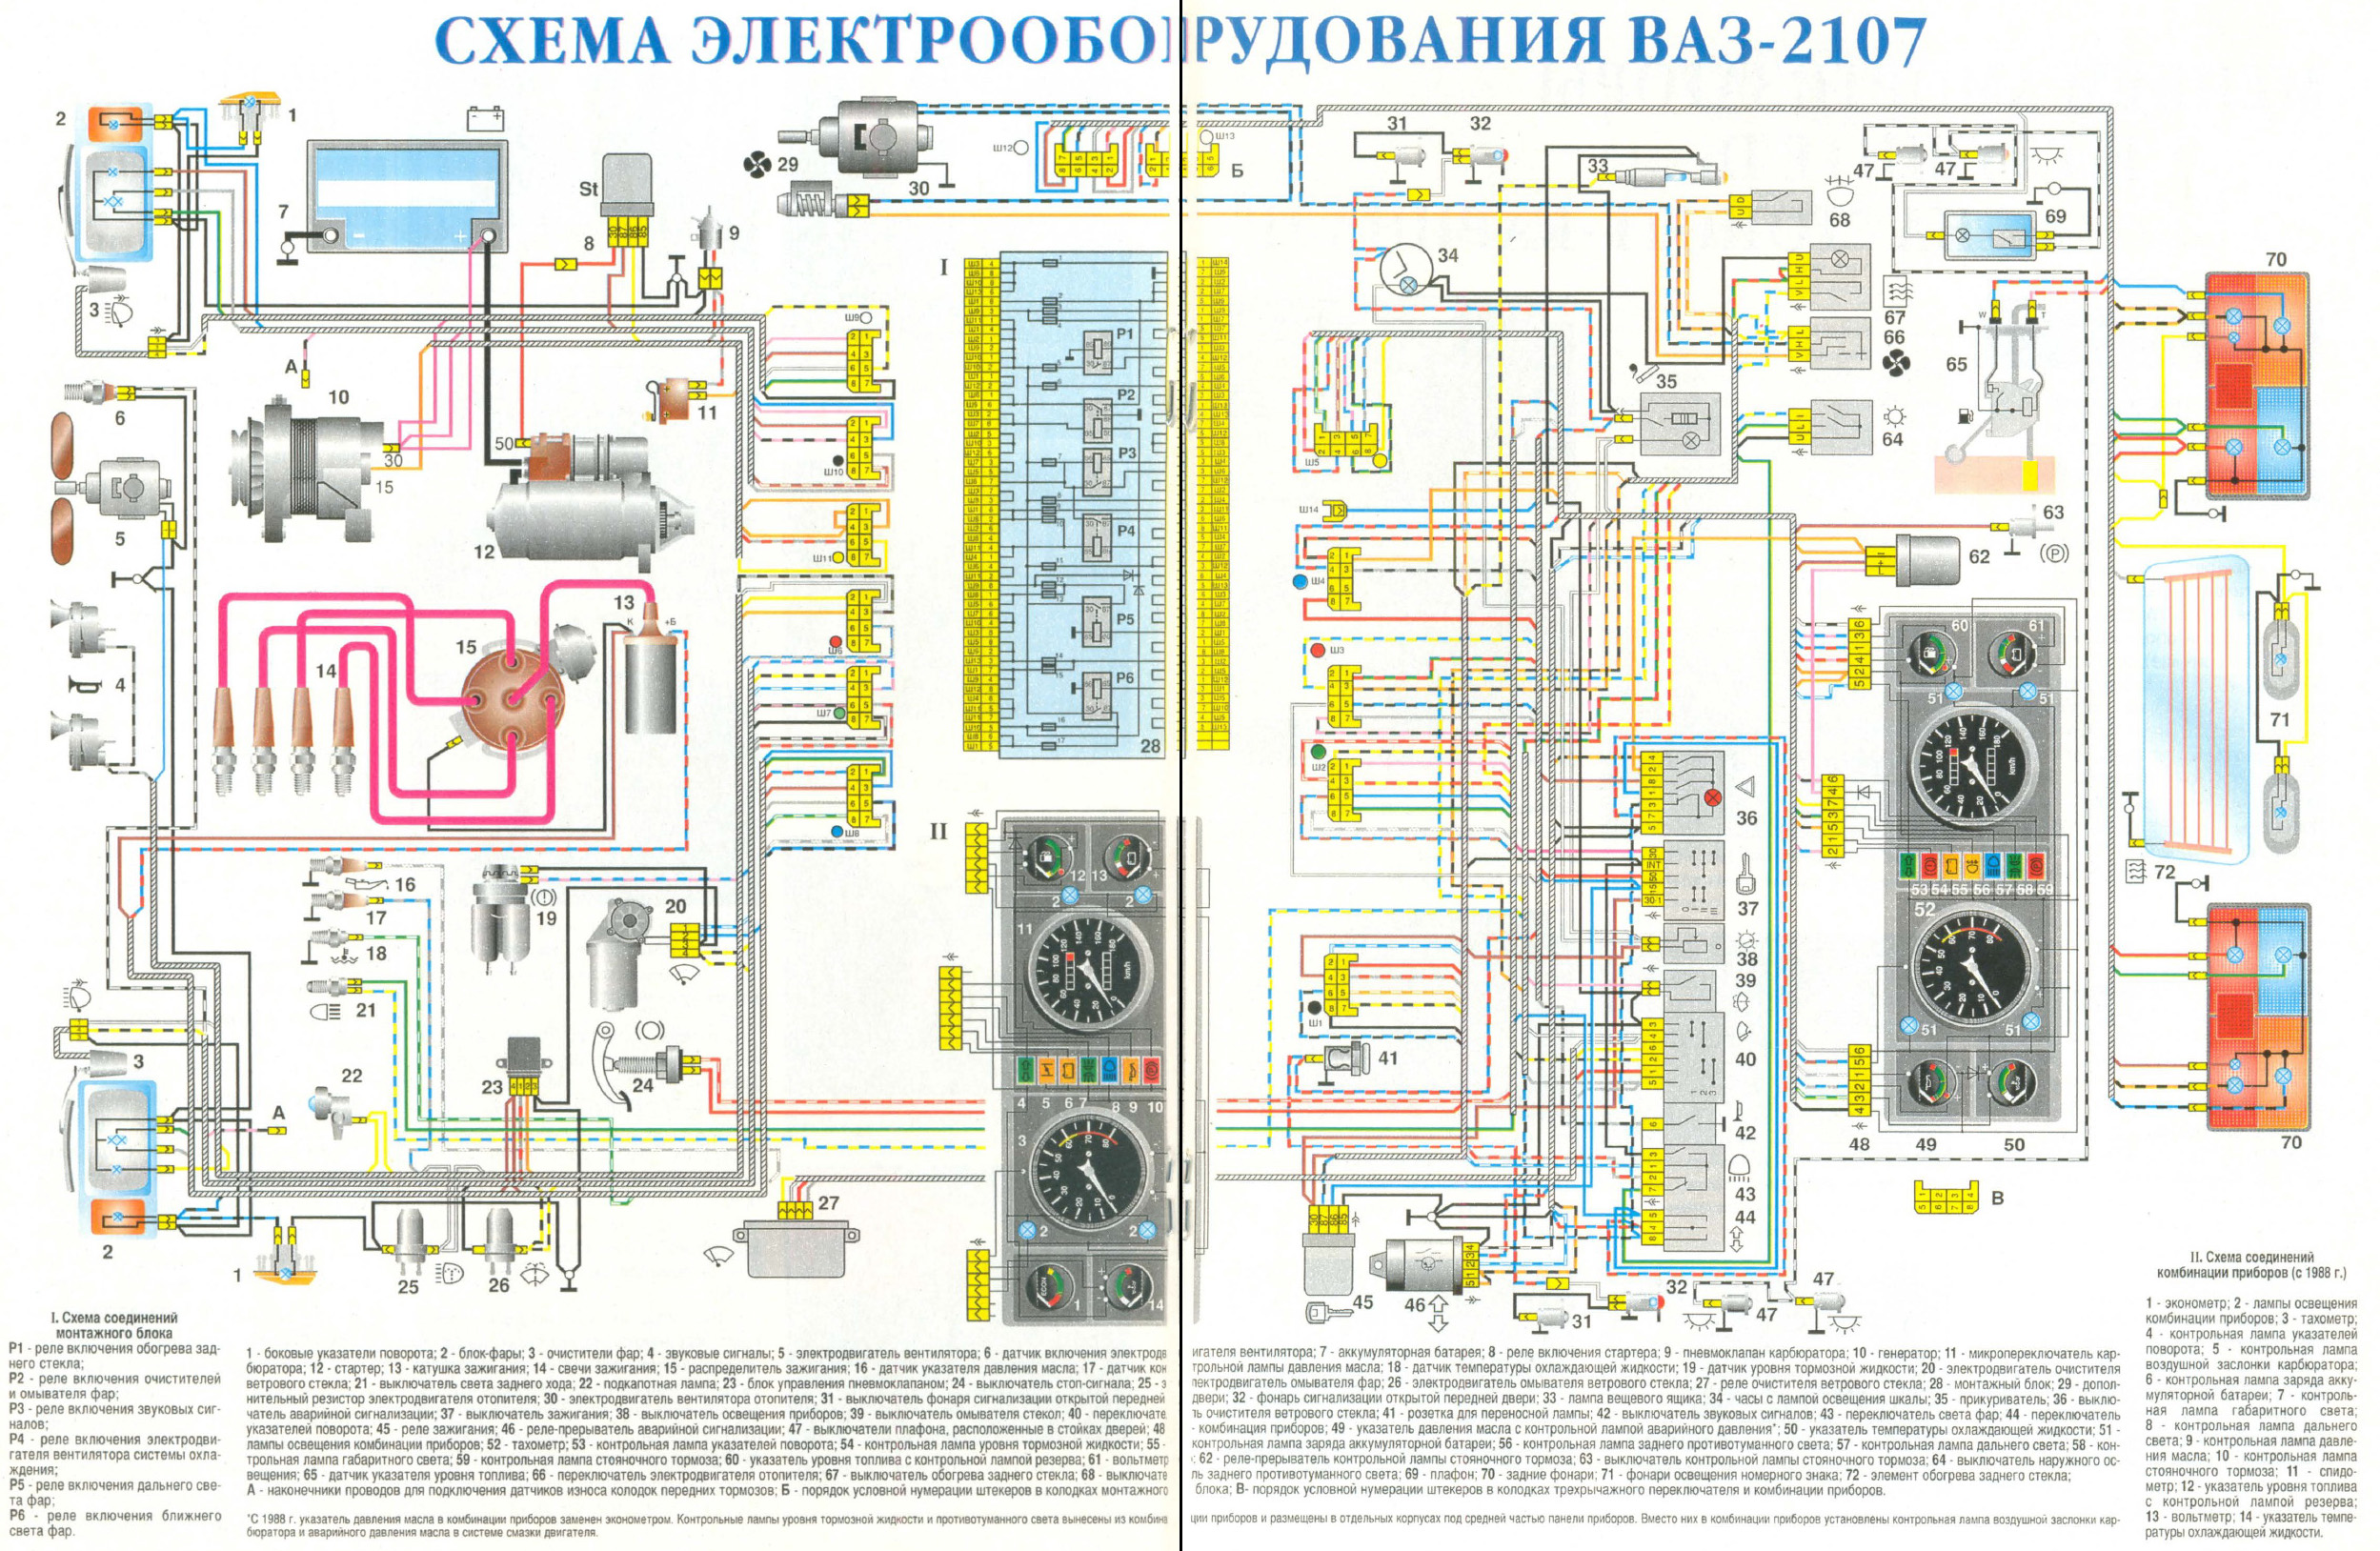 Схема подключения поворотов и аварийной сигнализации на ваз-2107, 2105 и 2104